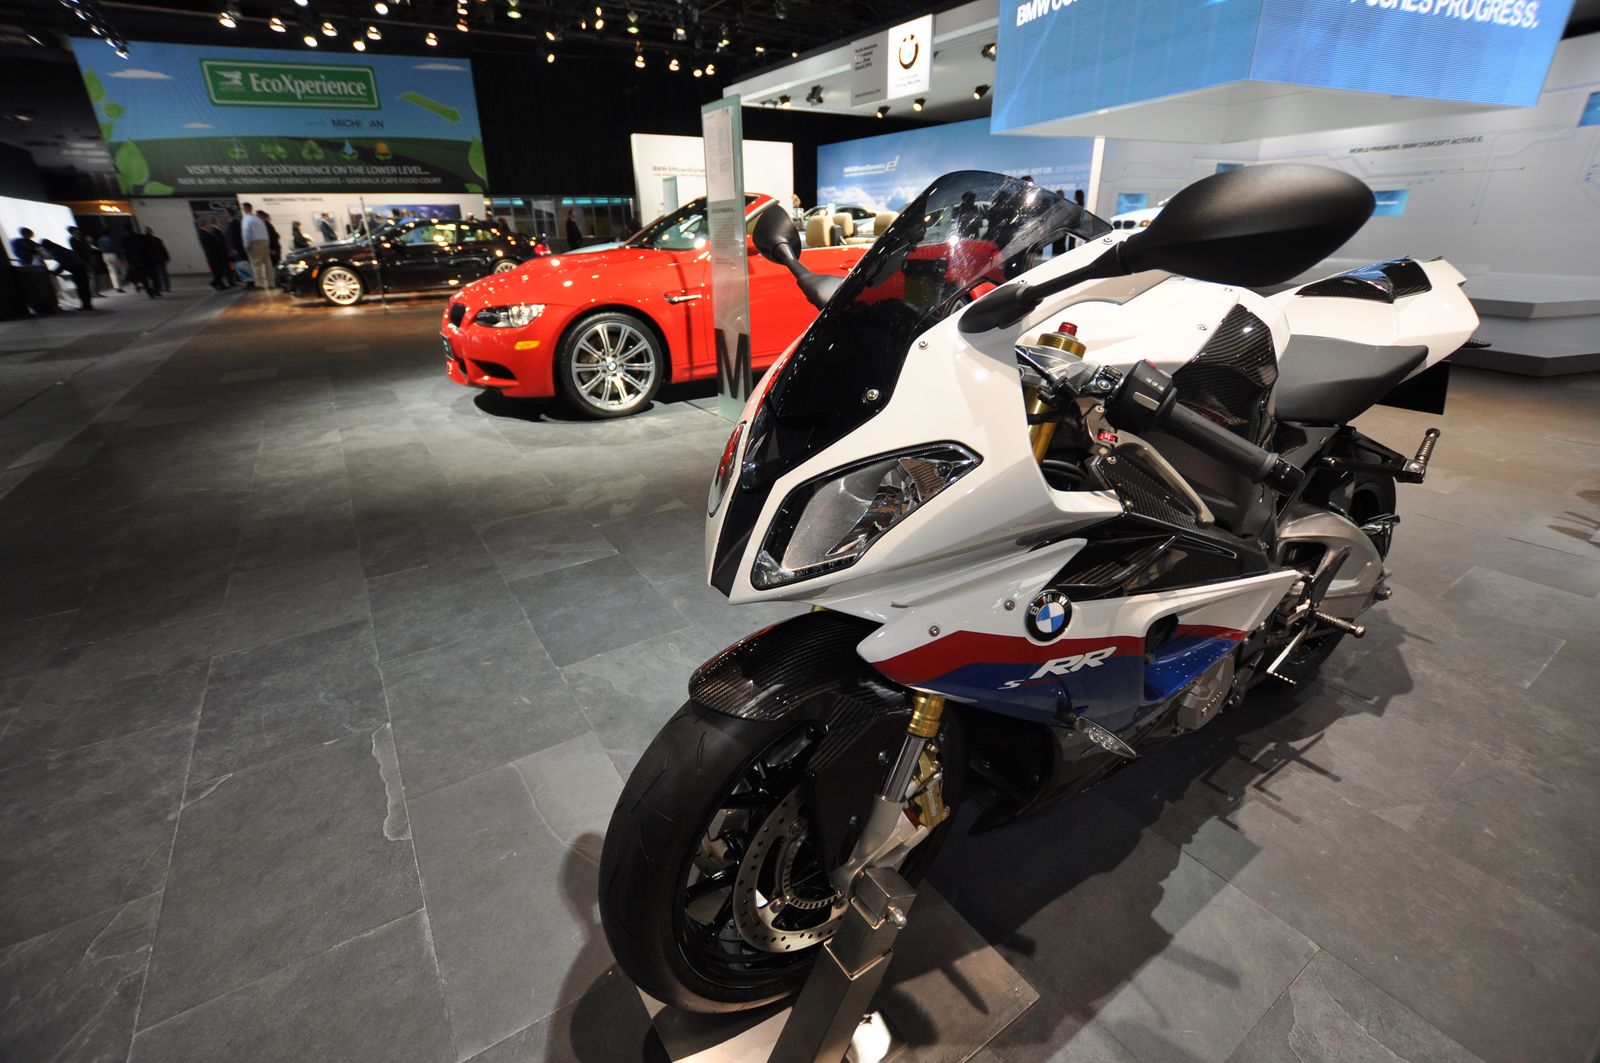 BMW's 2010 S1000RR superbike - full details released